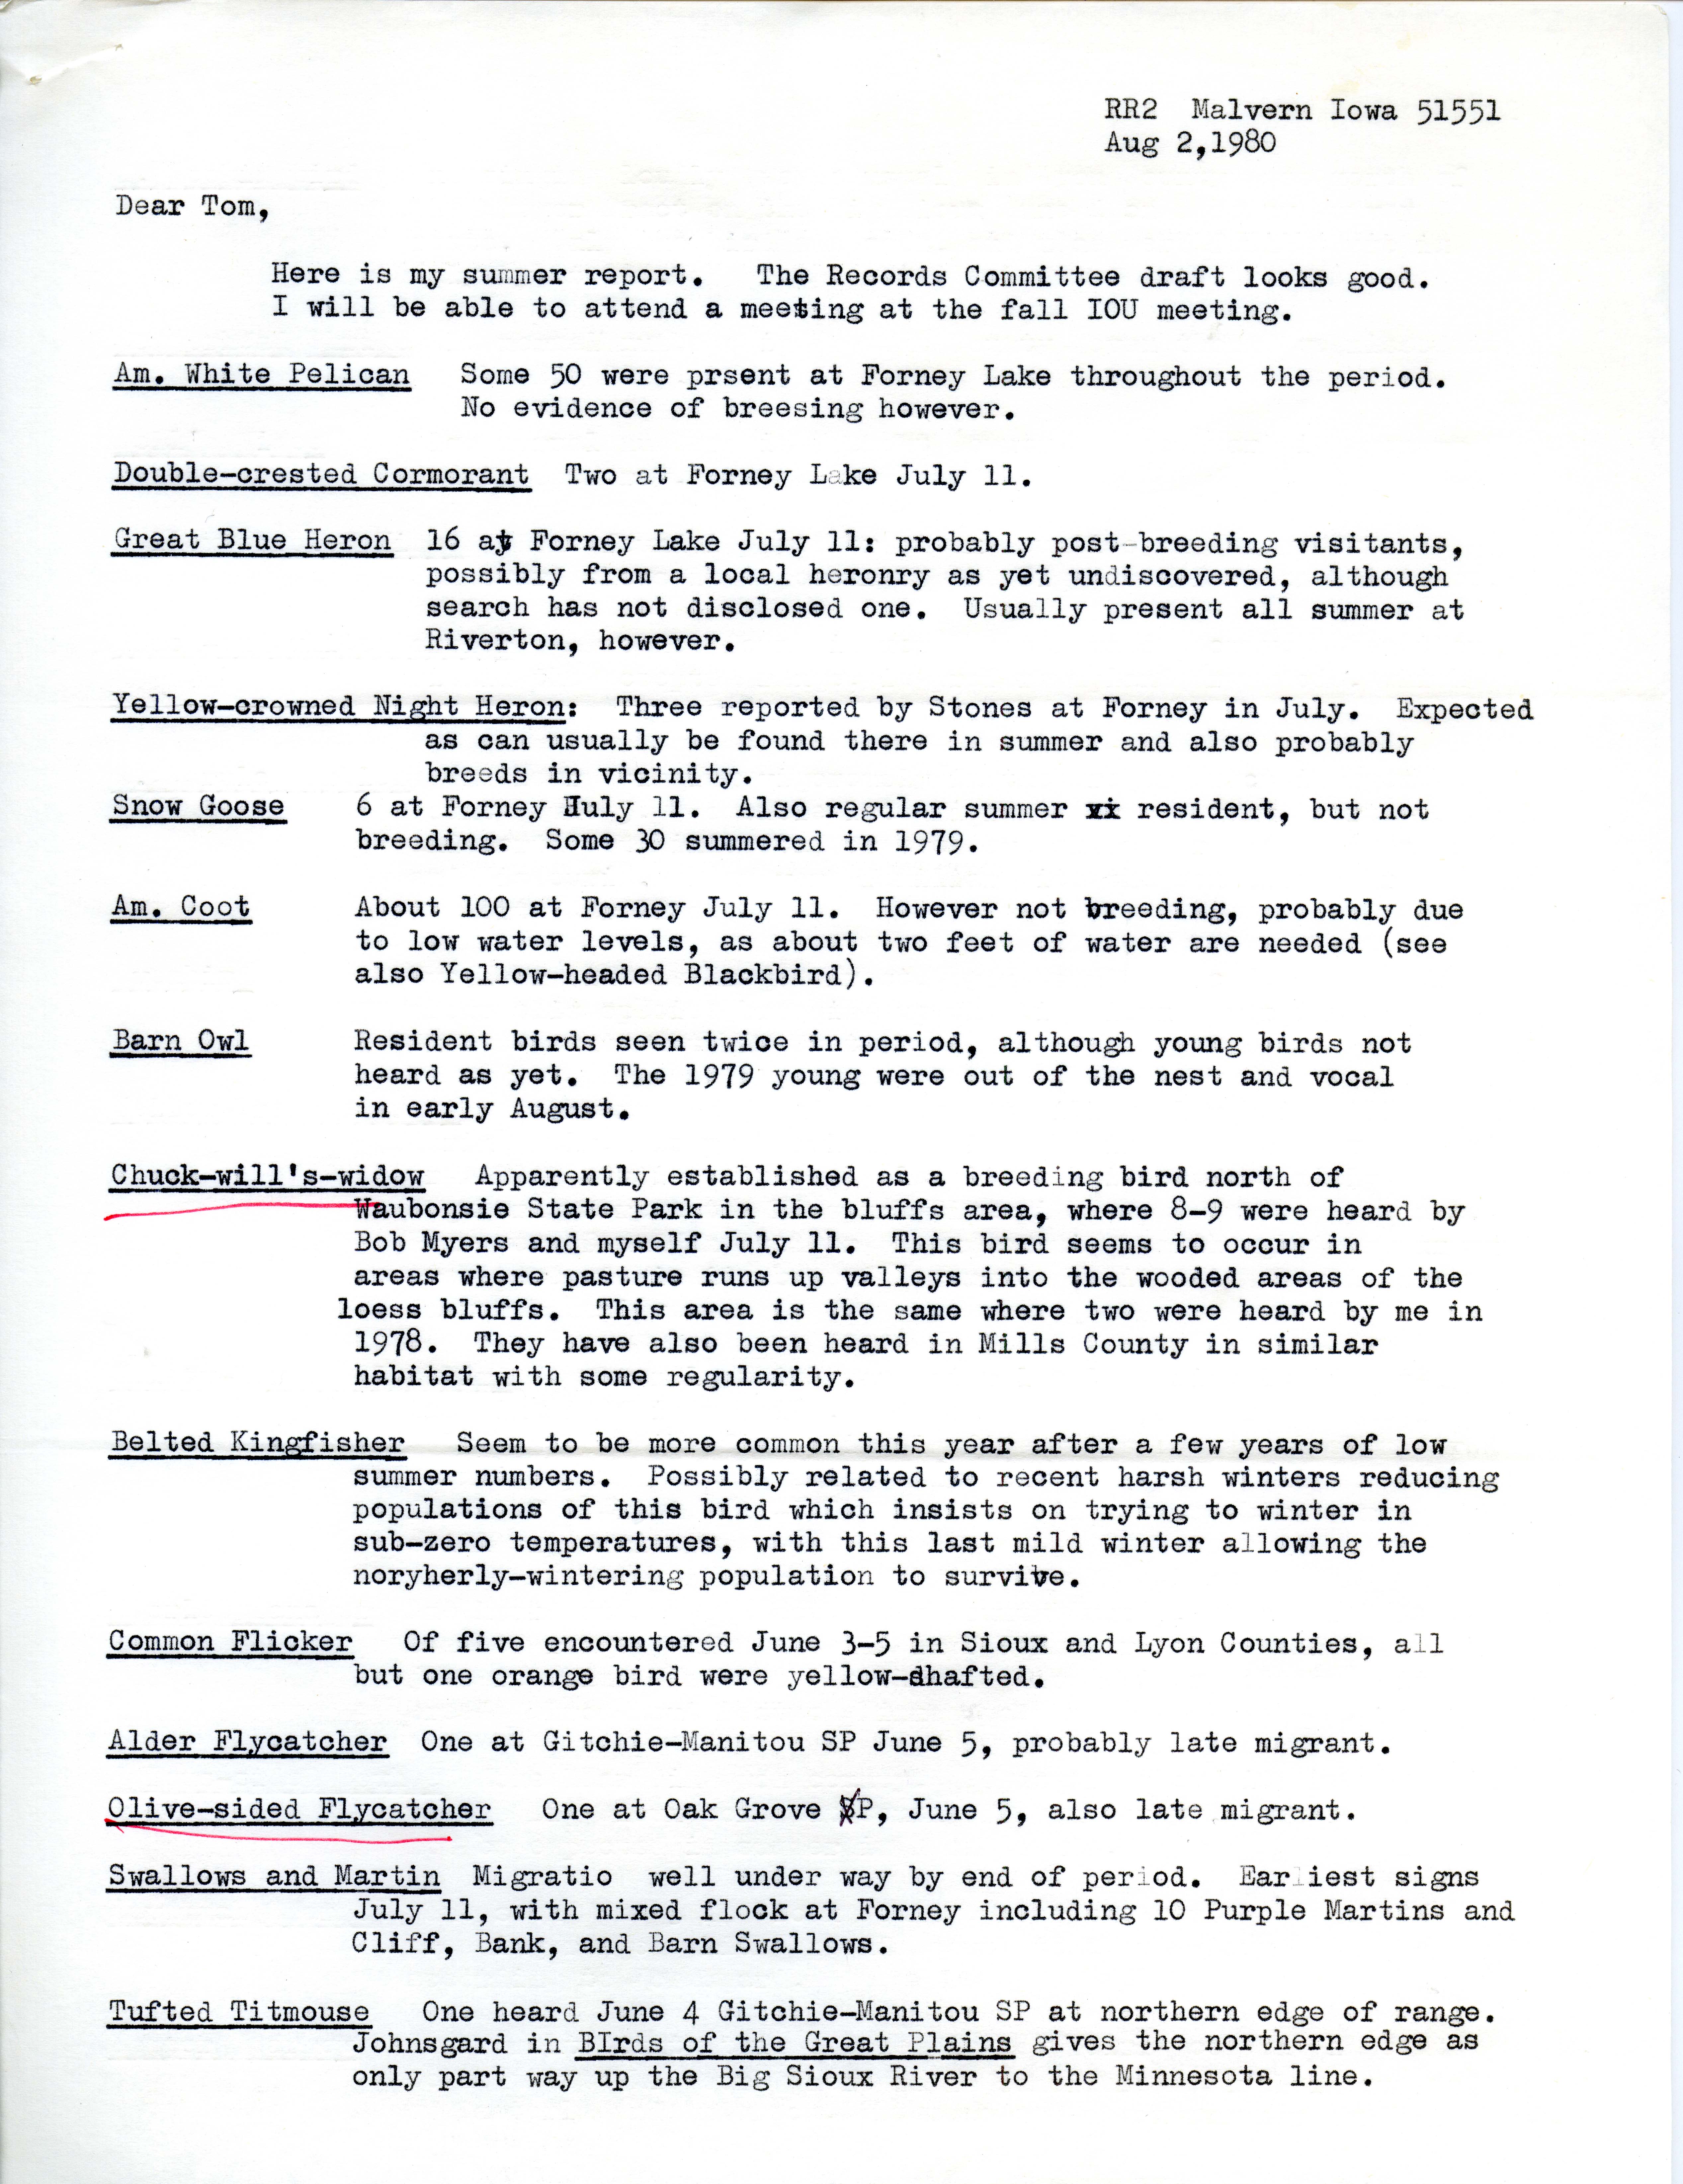 W. Ross Silcock letter to Thomas H. Kent regarding bird sightings, August 2, 1980